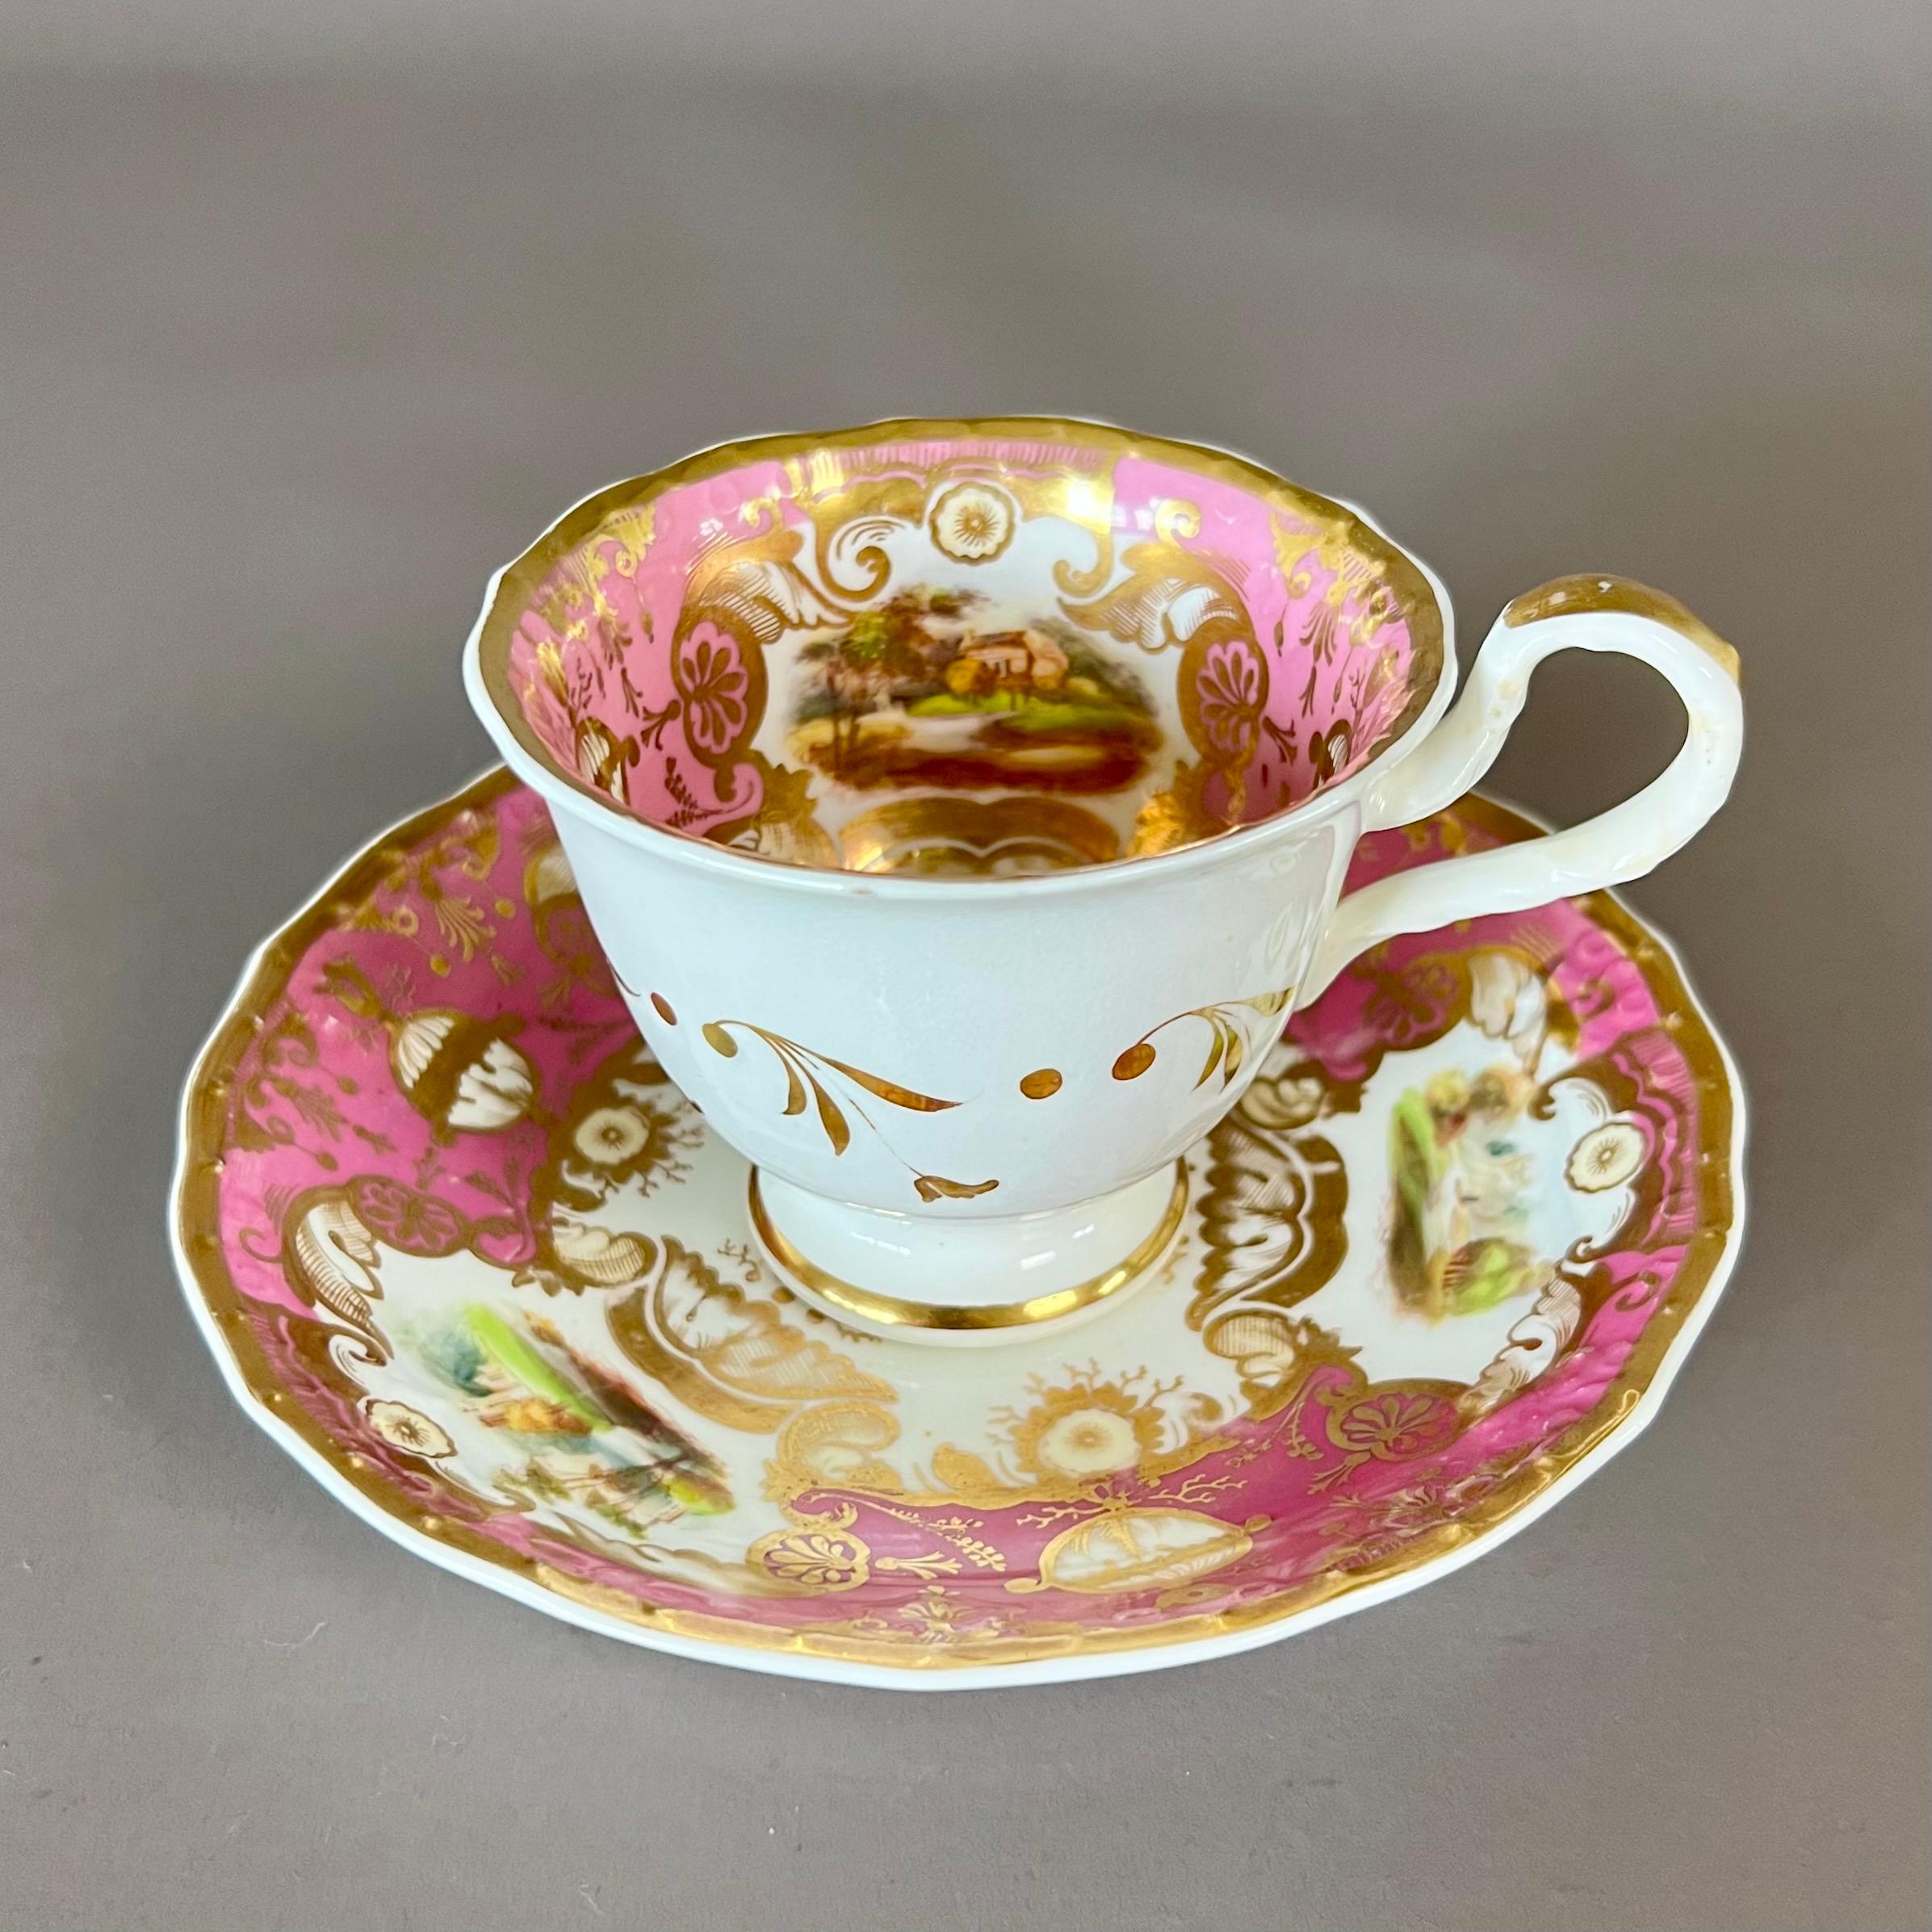 English Samuel Alcock Porcelain Teacup Trio, Pink, Gilt and Sublime Landscapes, ca 1827